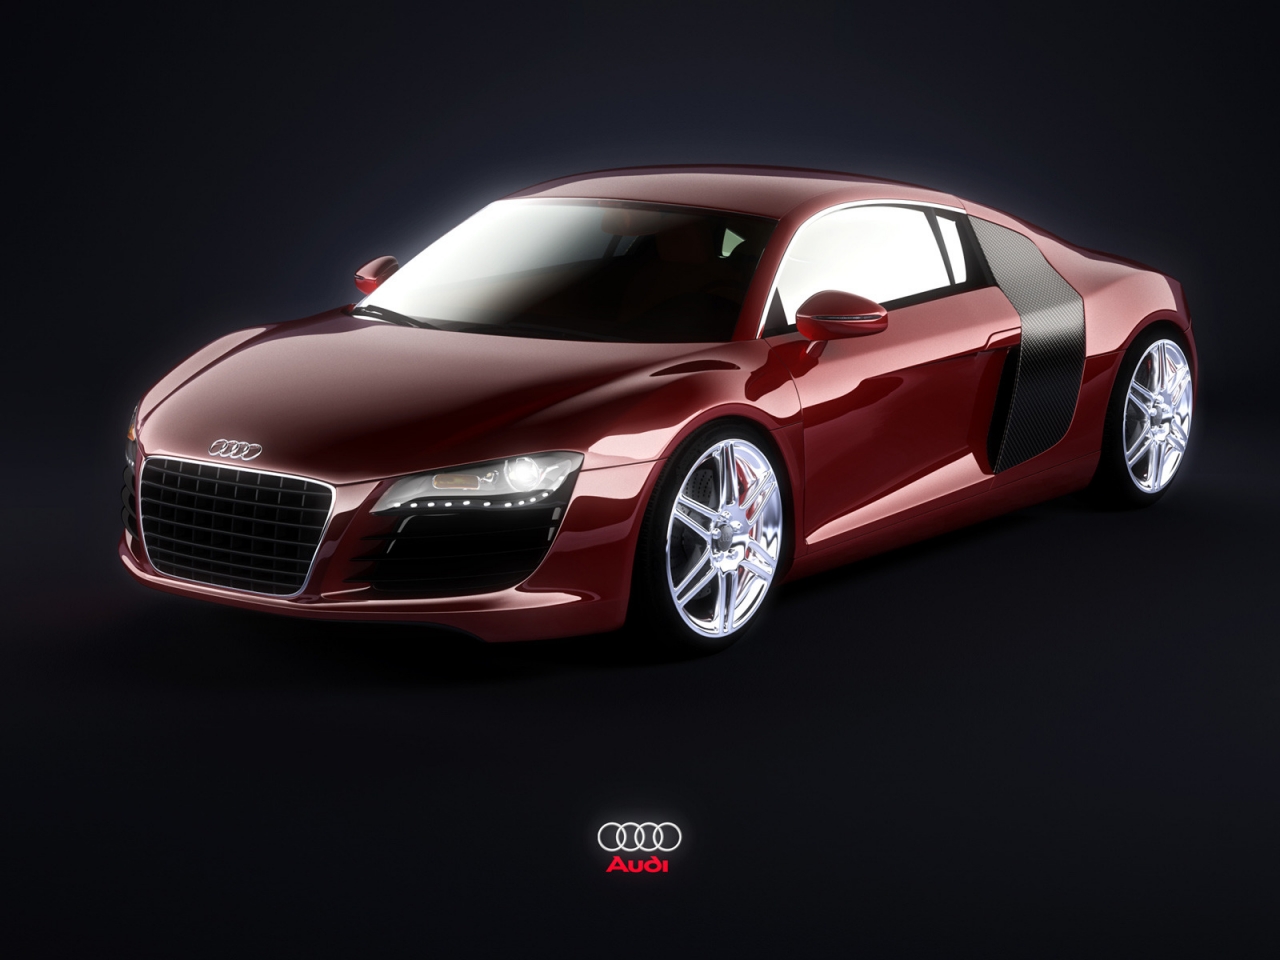 Audi R8 Burgundy for 1280 x 960 resolution